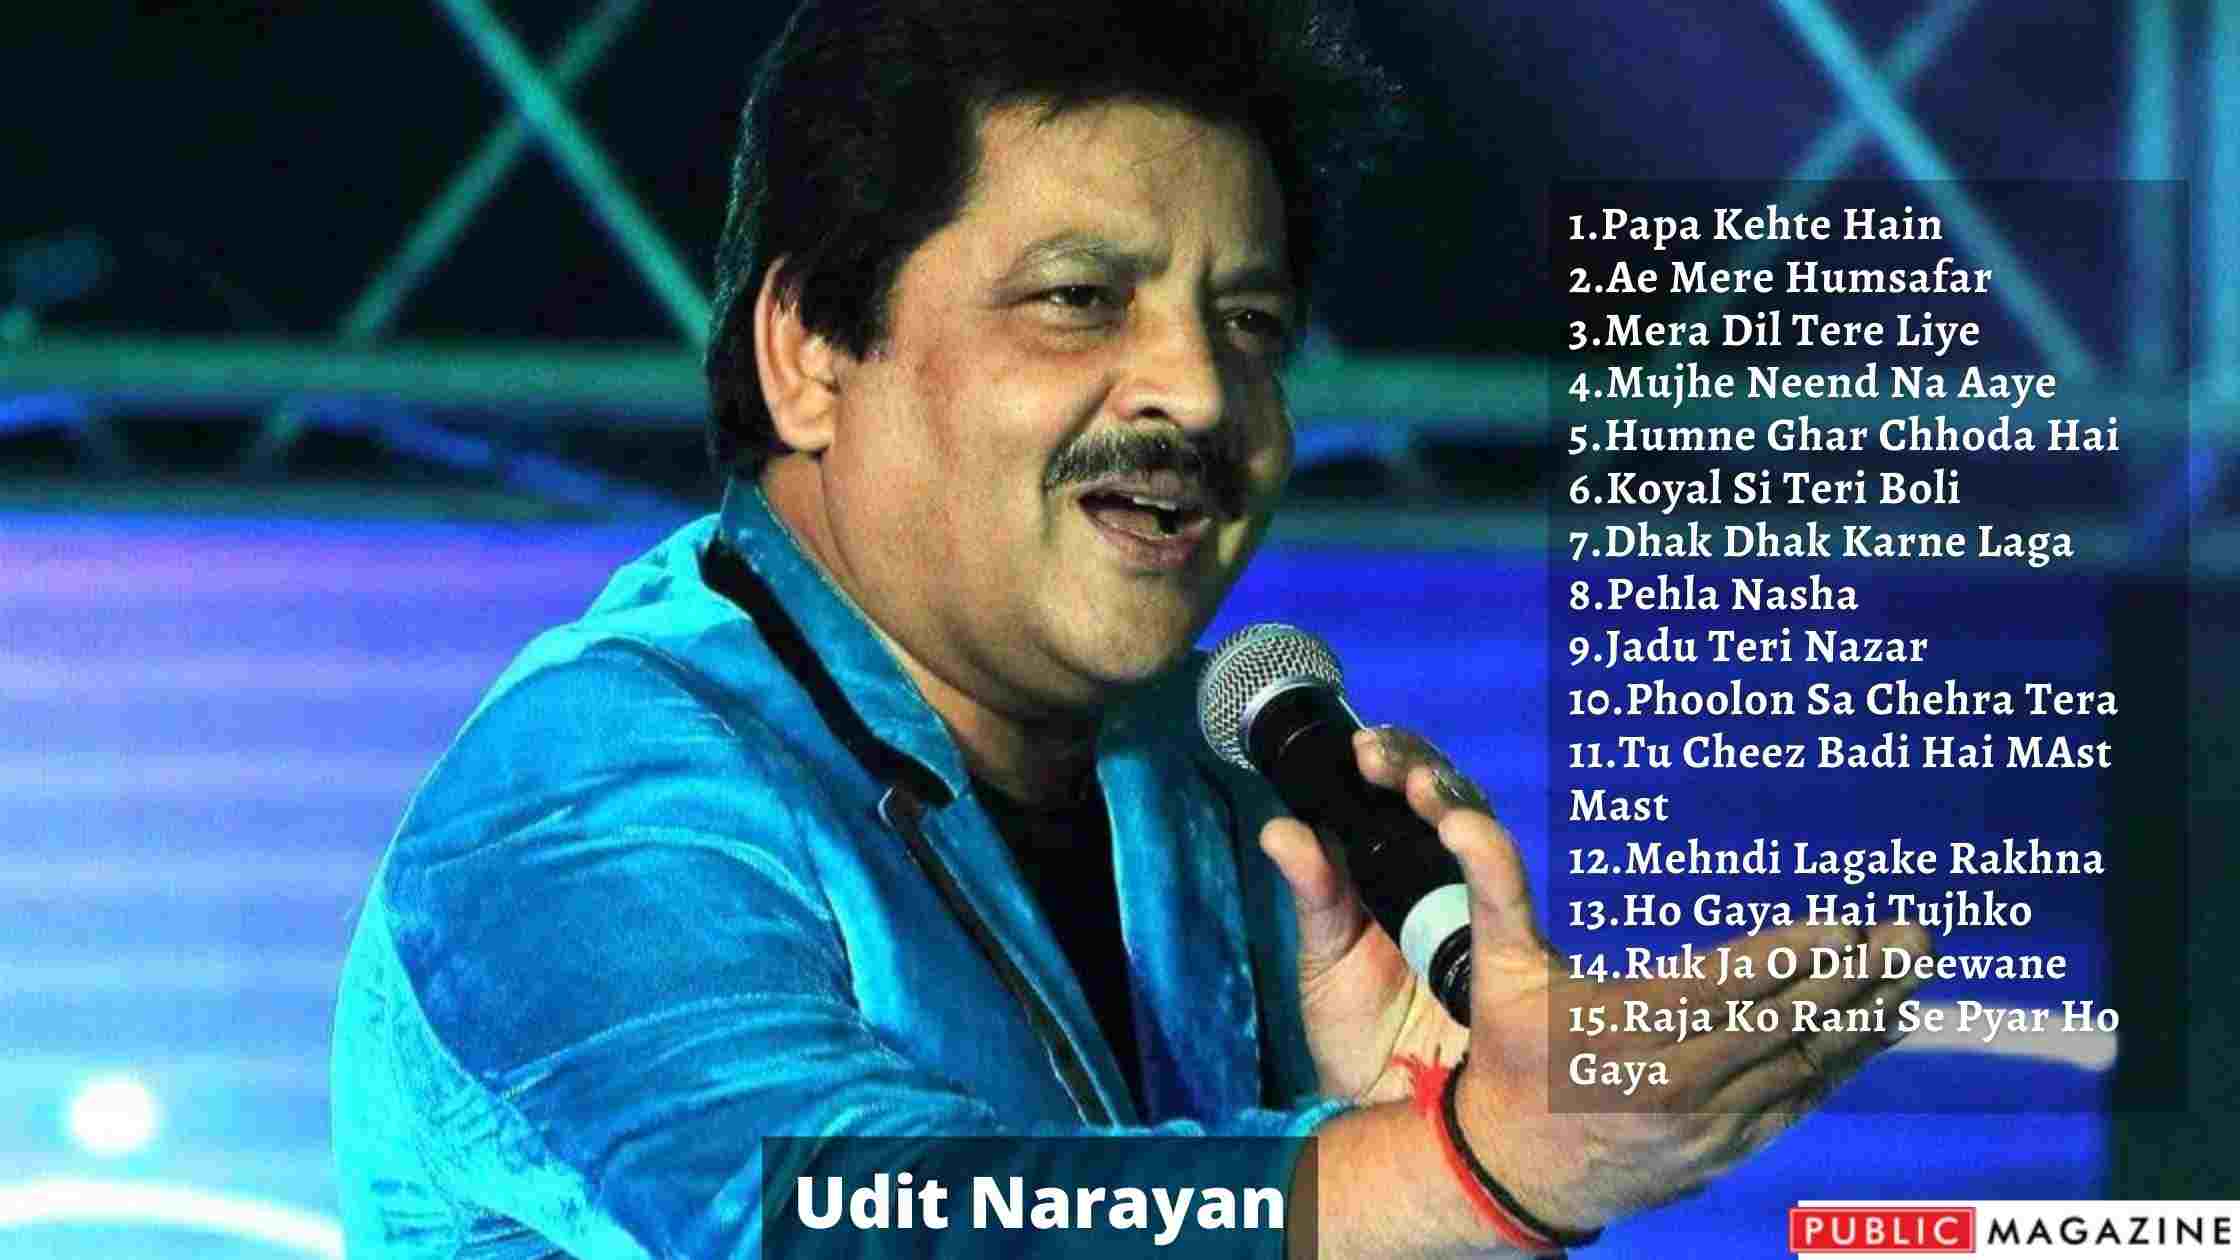 Udit Narayan Biography, Wiki, And Songs